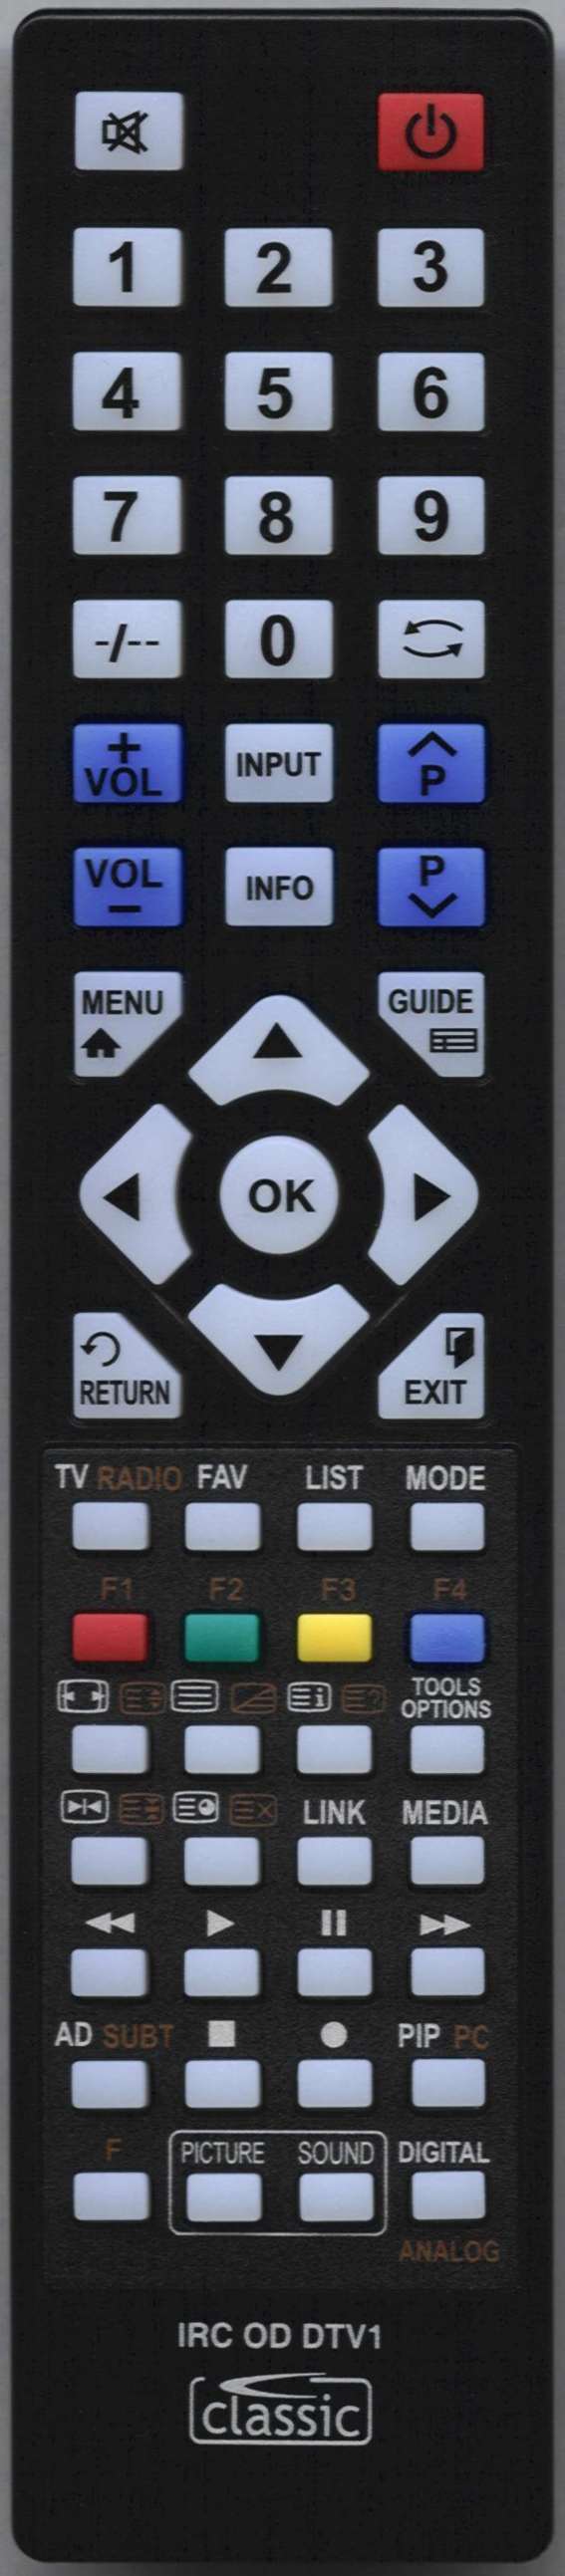 RCA RB32H1-EU Remote Control Alternative 